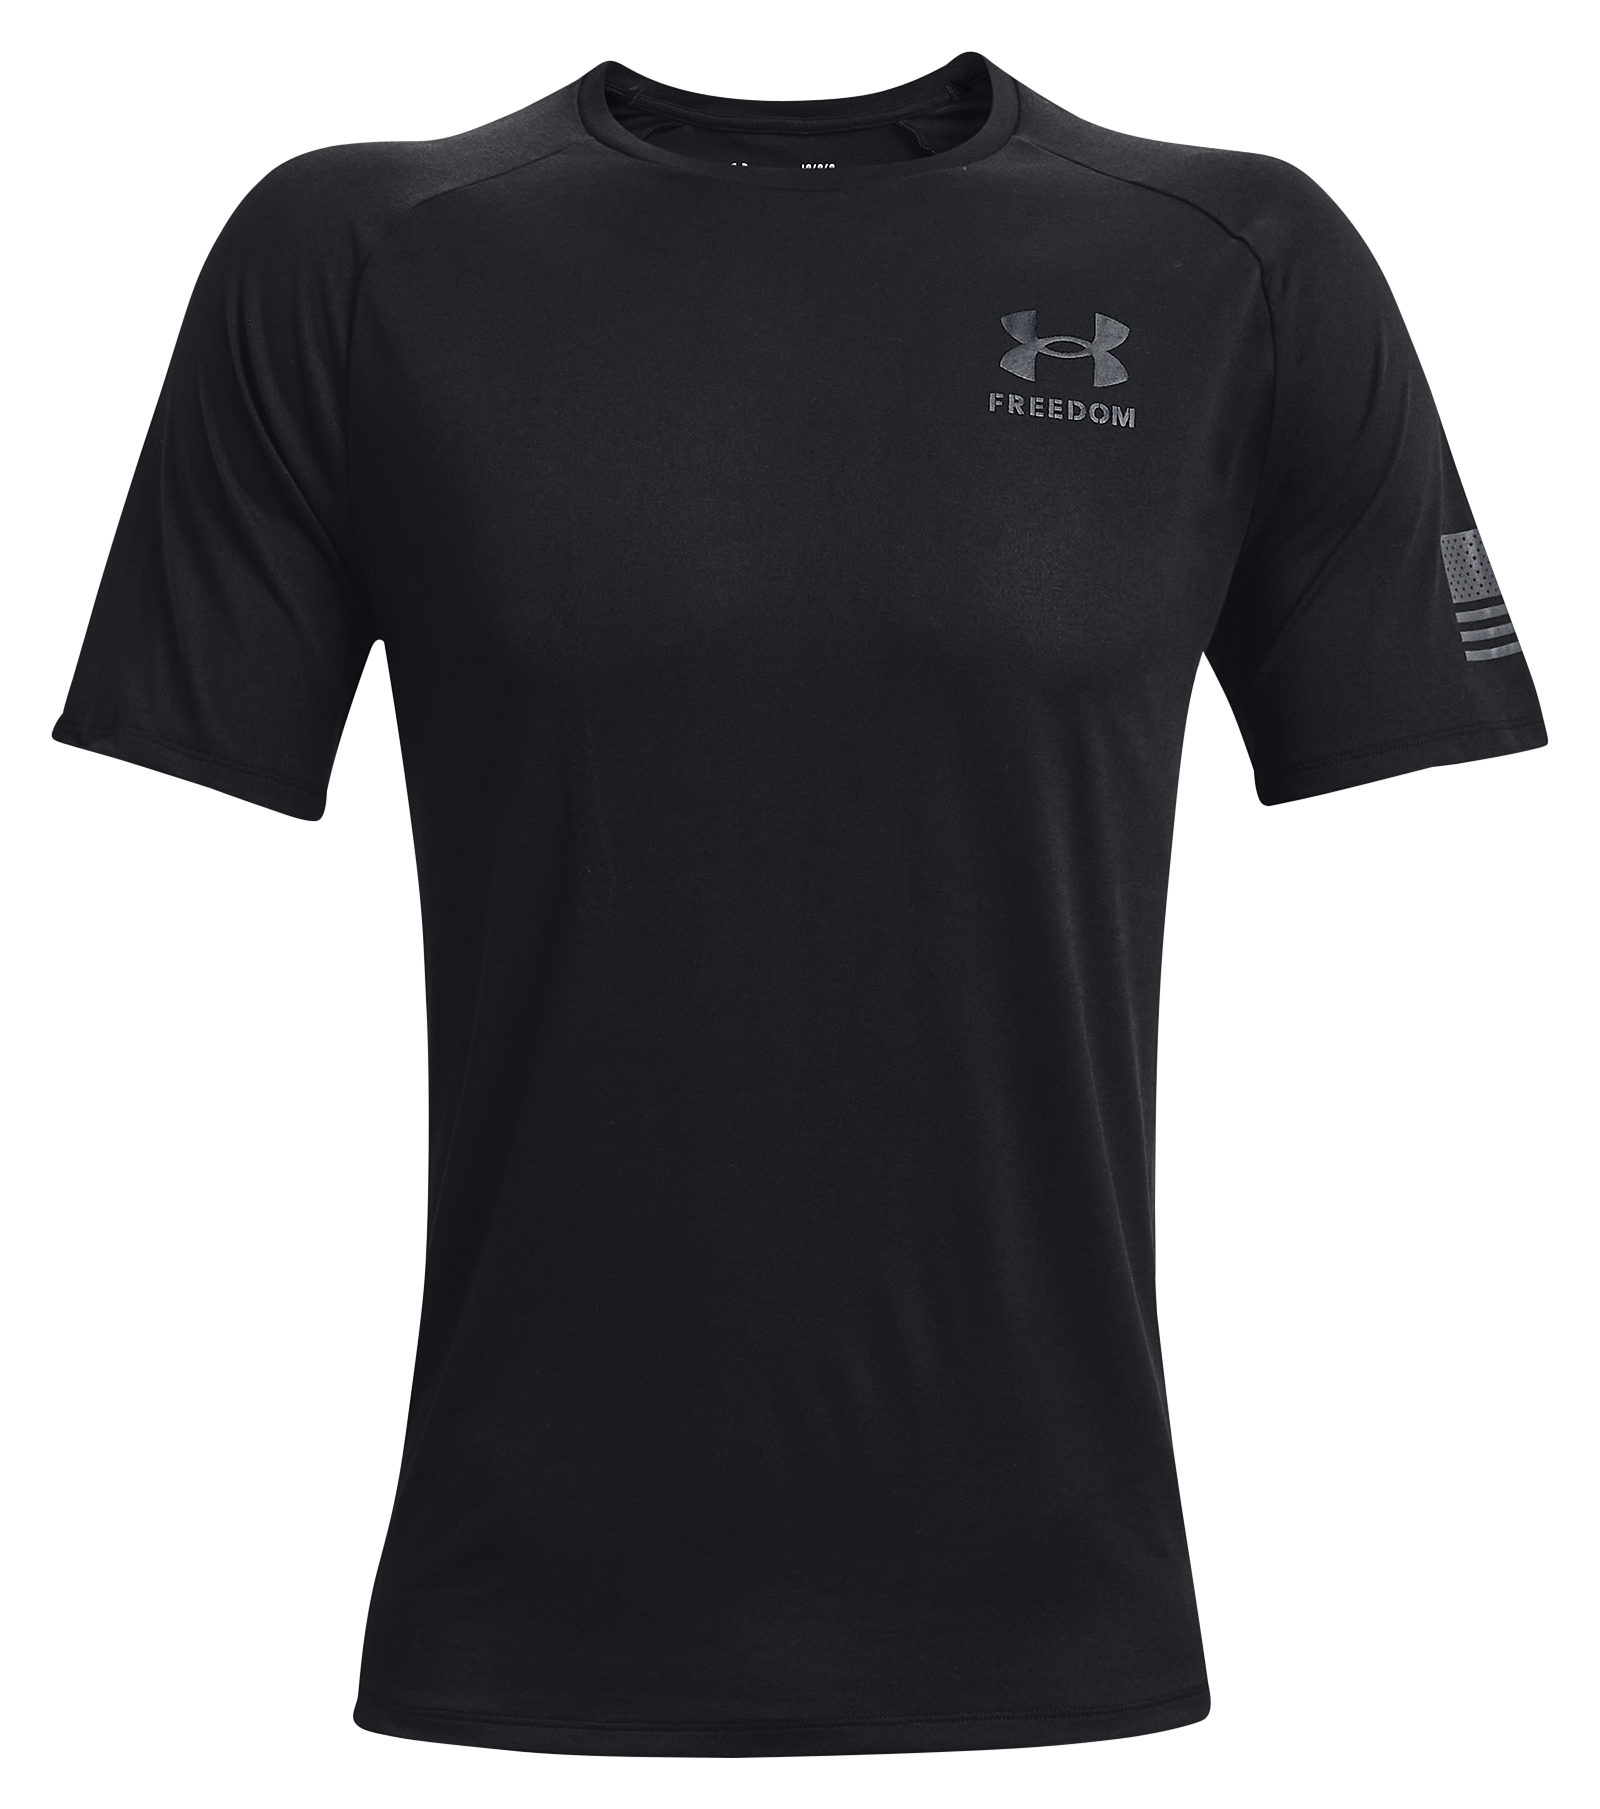 Under Armour Freedom Tech Short-Sleeve T-Shirt for Men